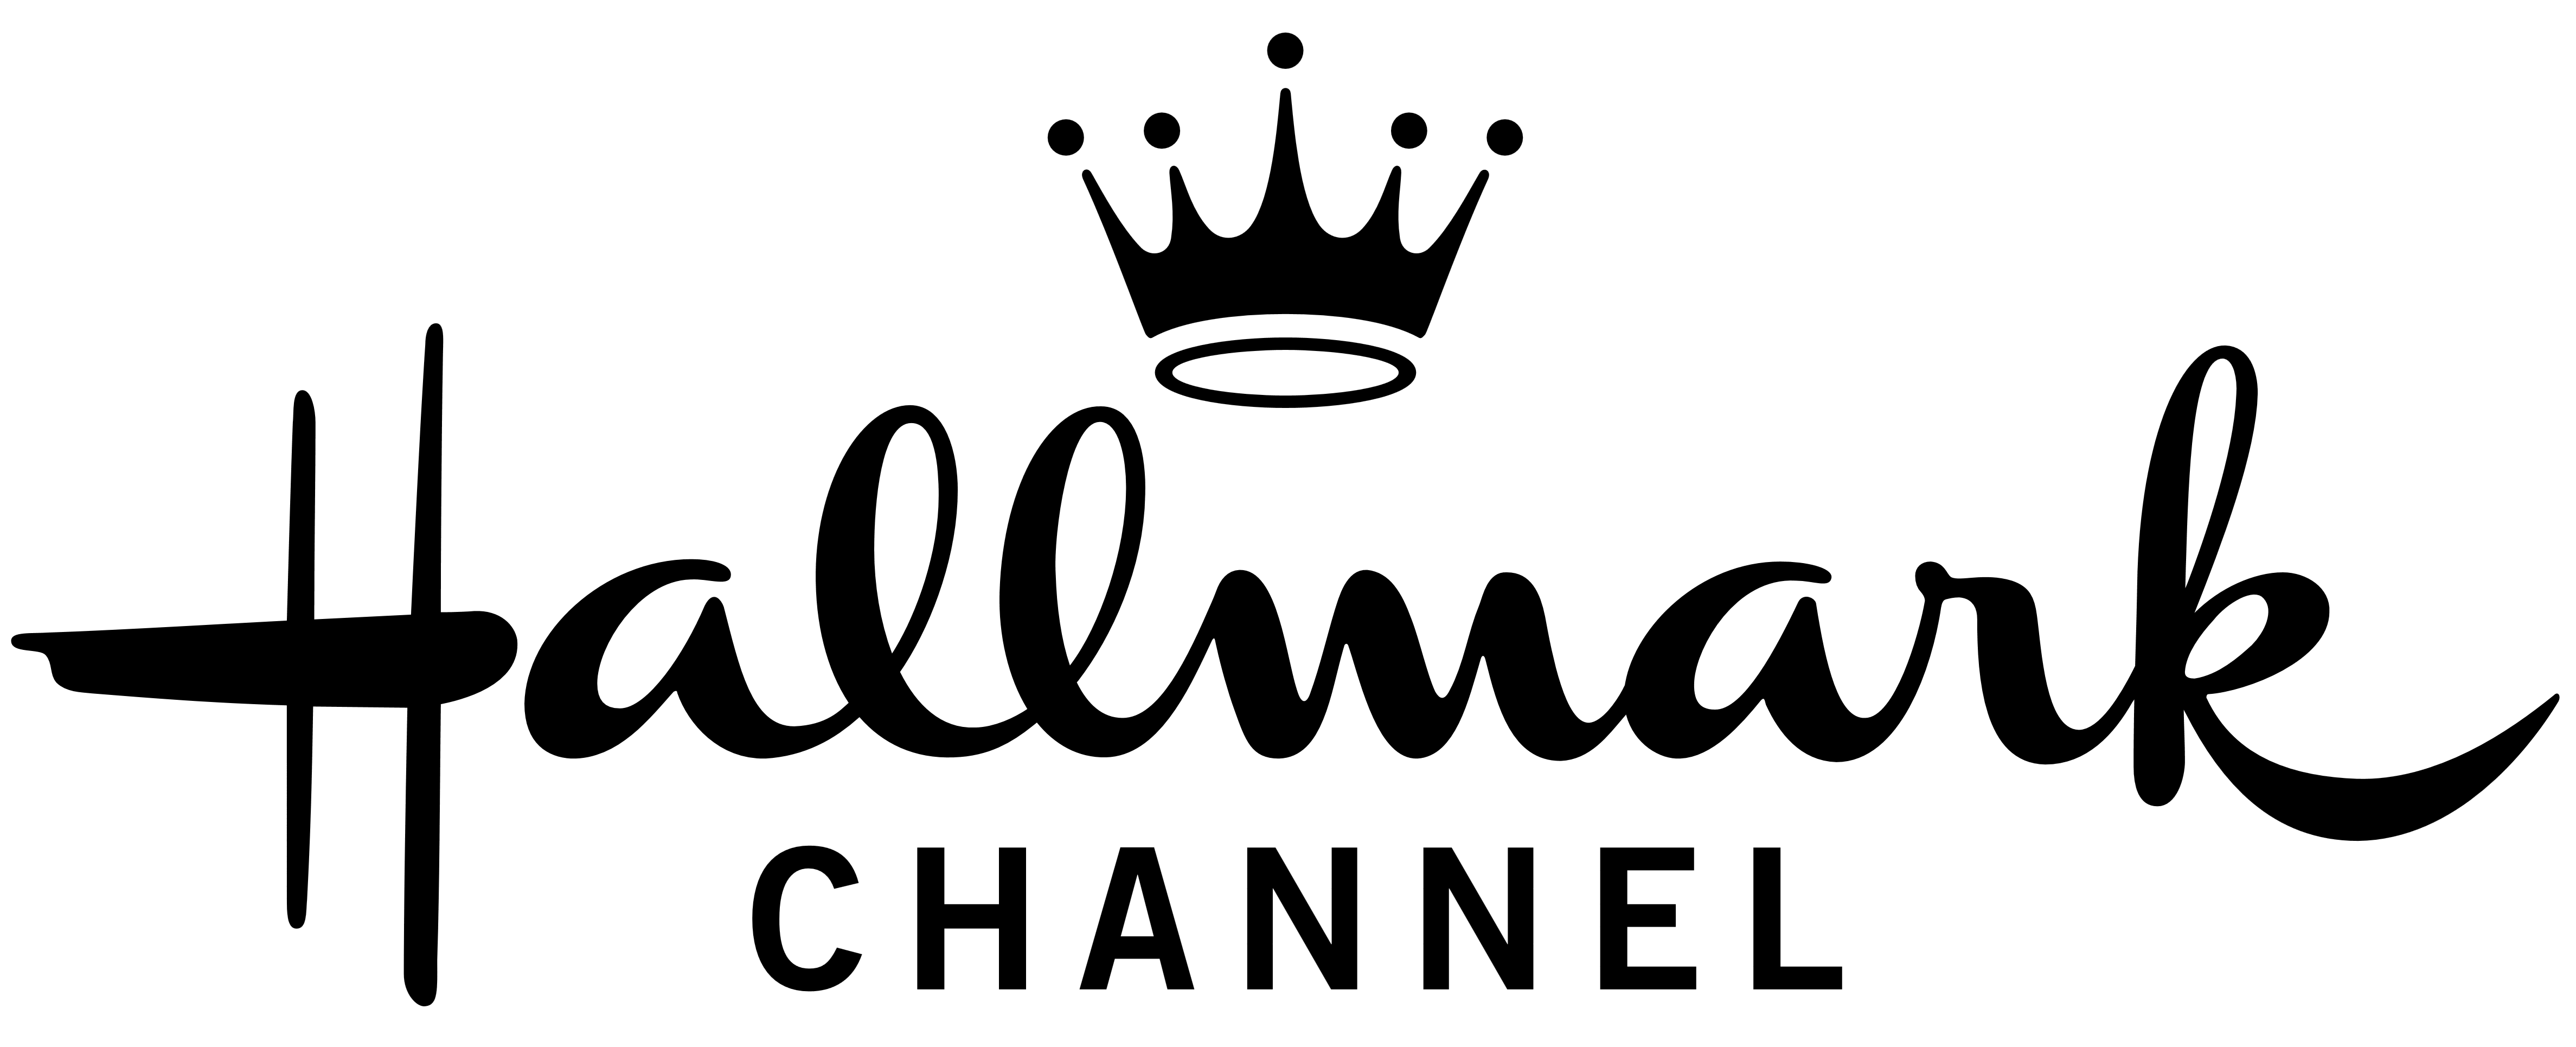 Hallmark logo, logotype